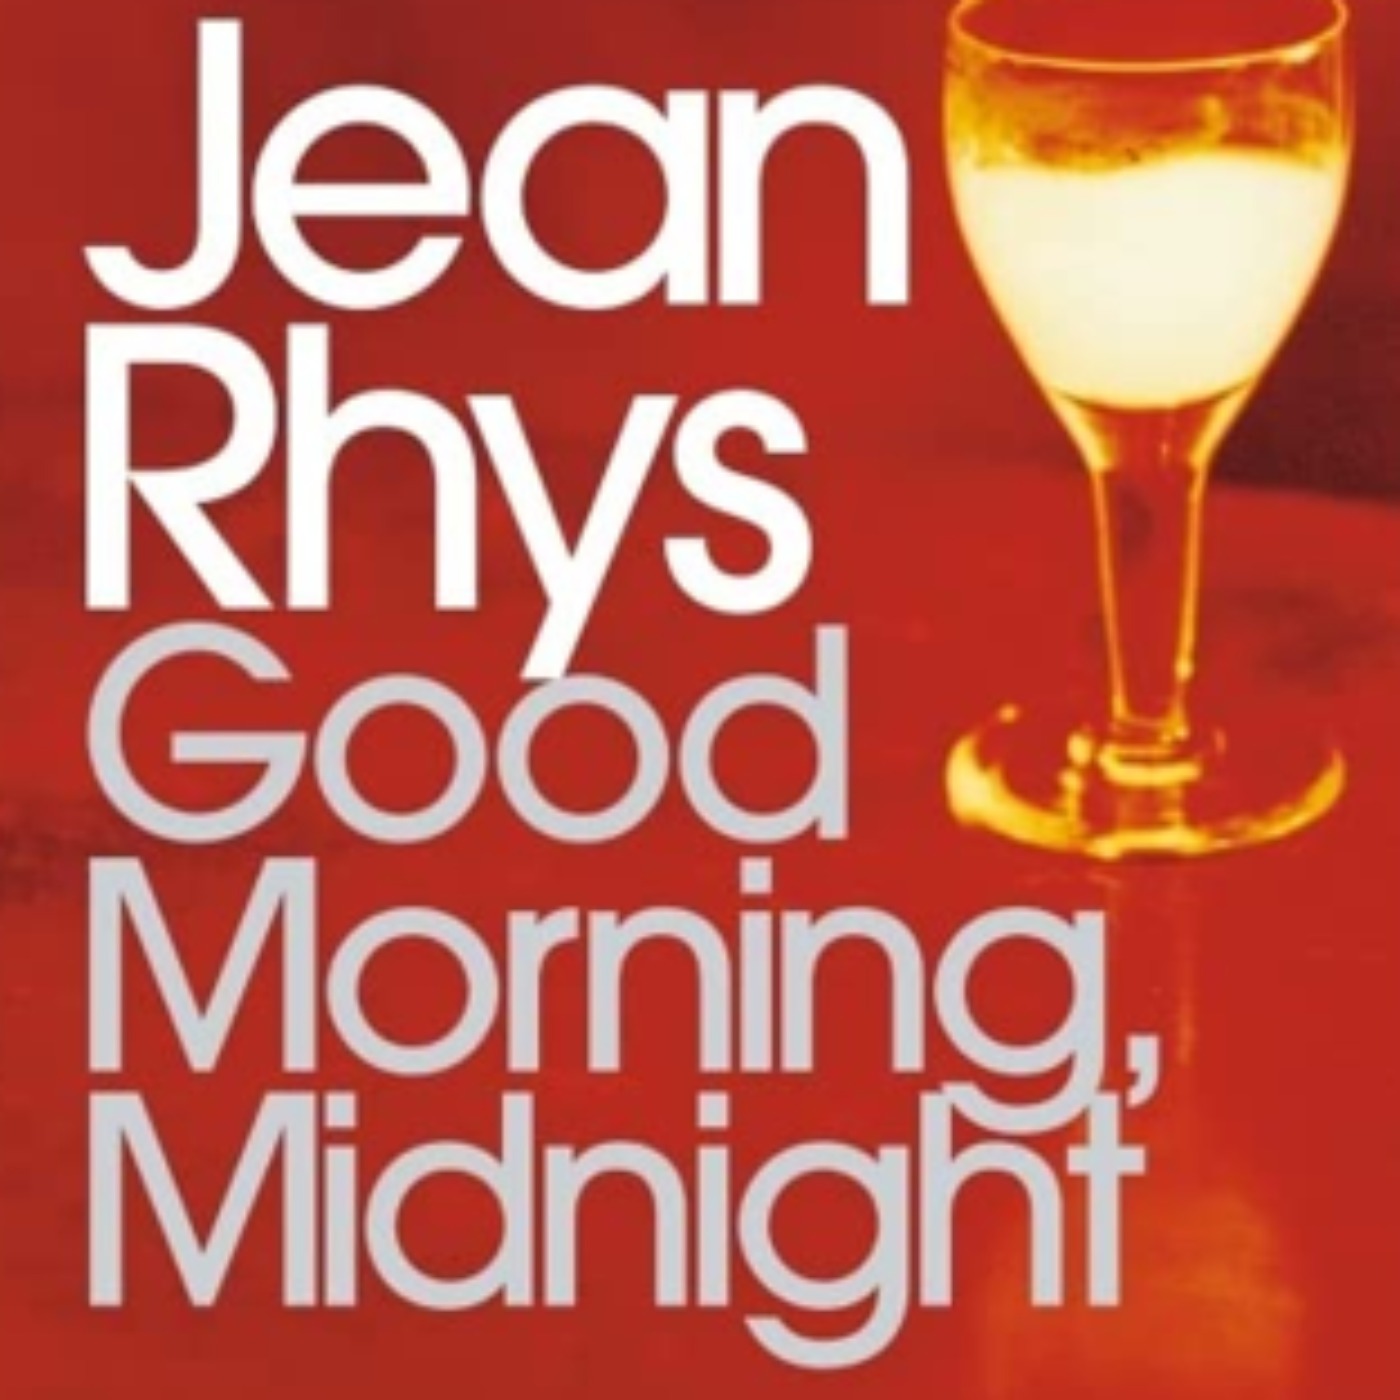 Good Morning, Midnight by Jean Rhys - rerun